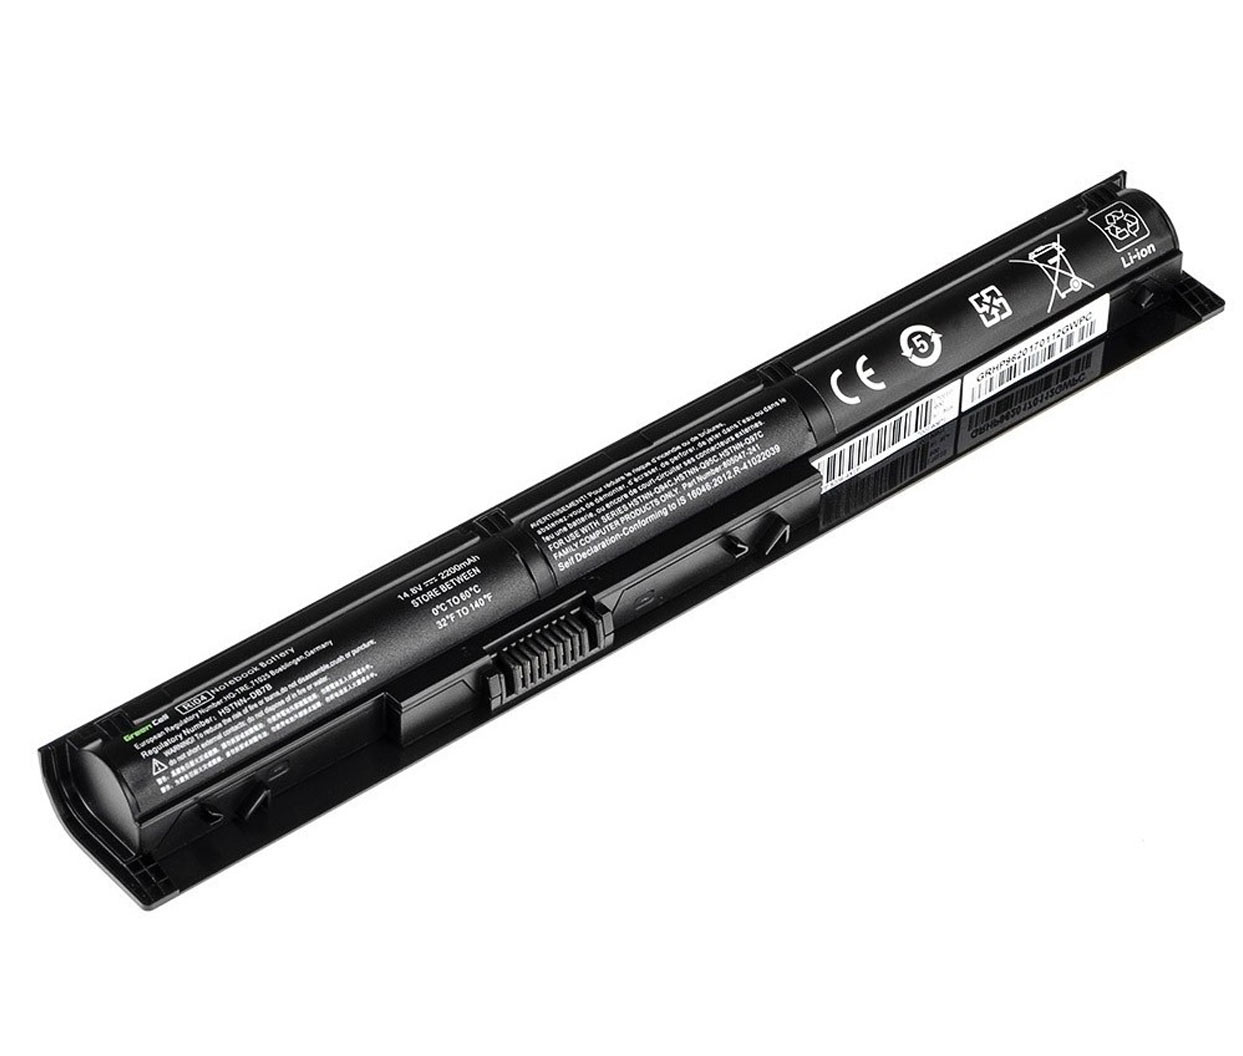 Baterija za HP ProBook 450 G3, 455 G3, 470 G3 - 2200mAh